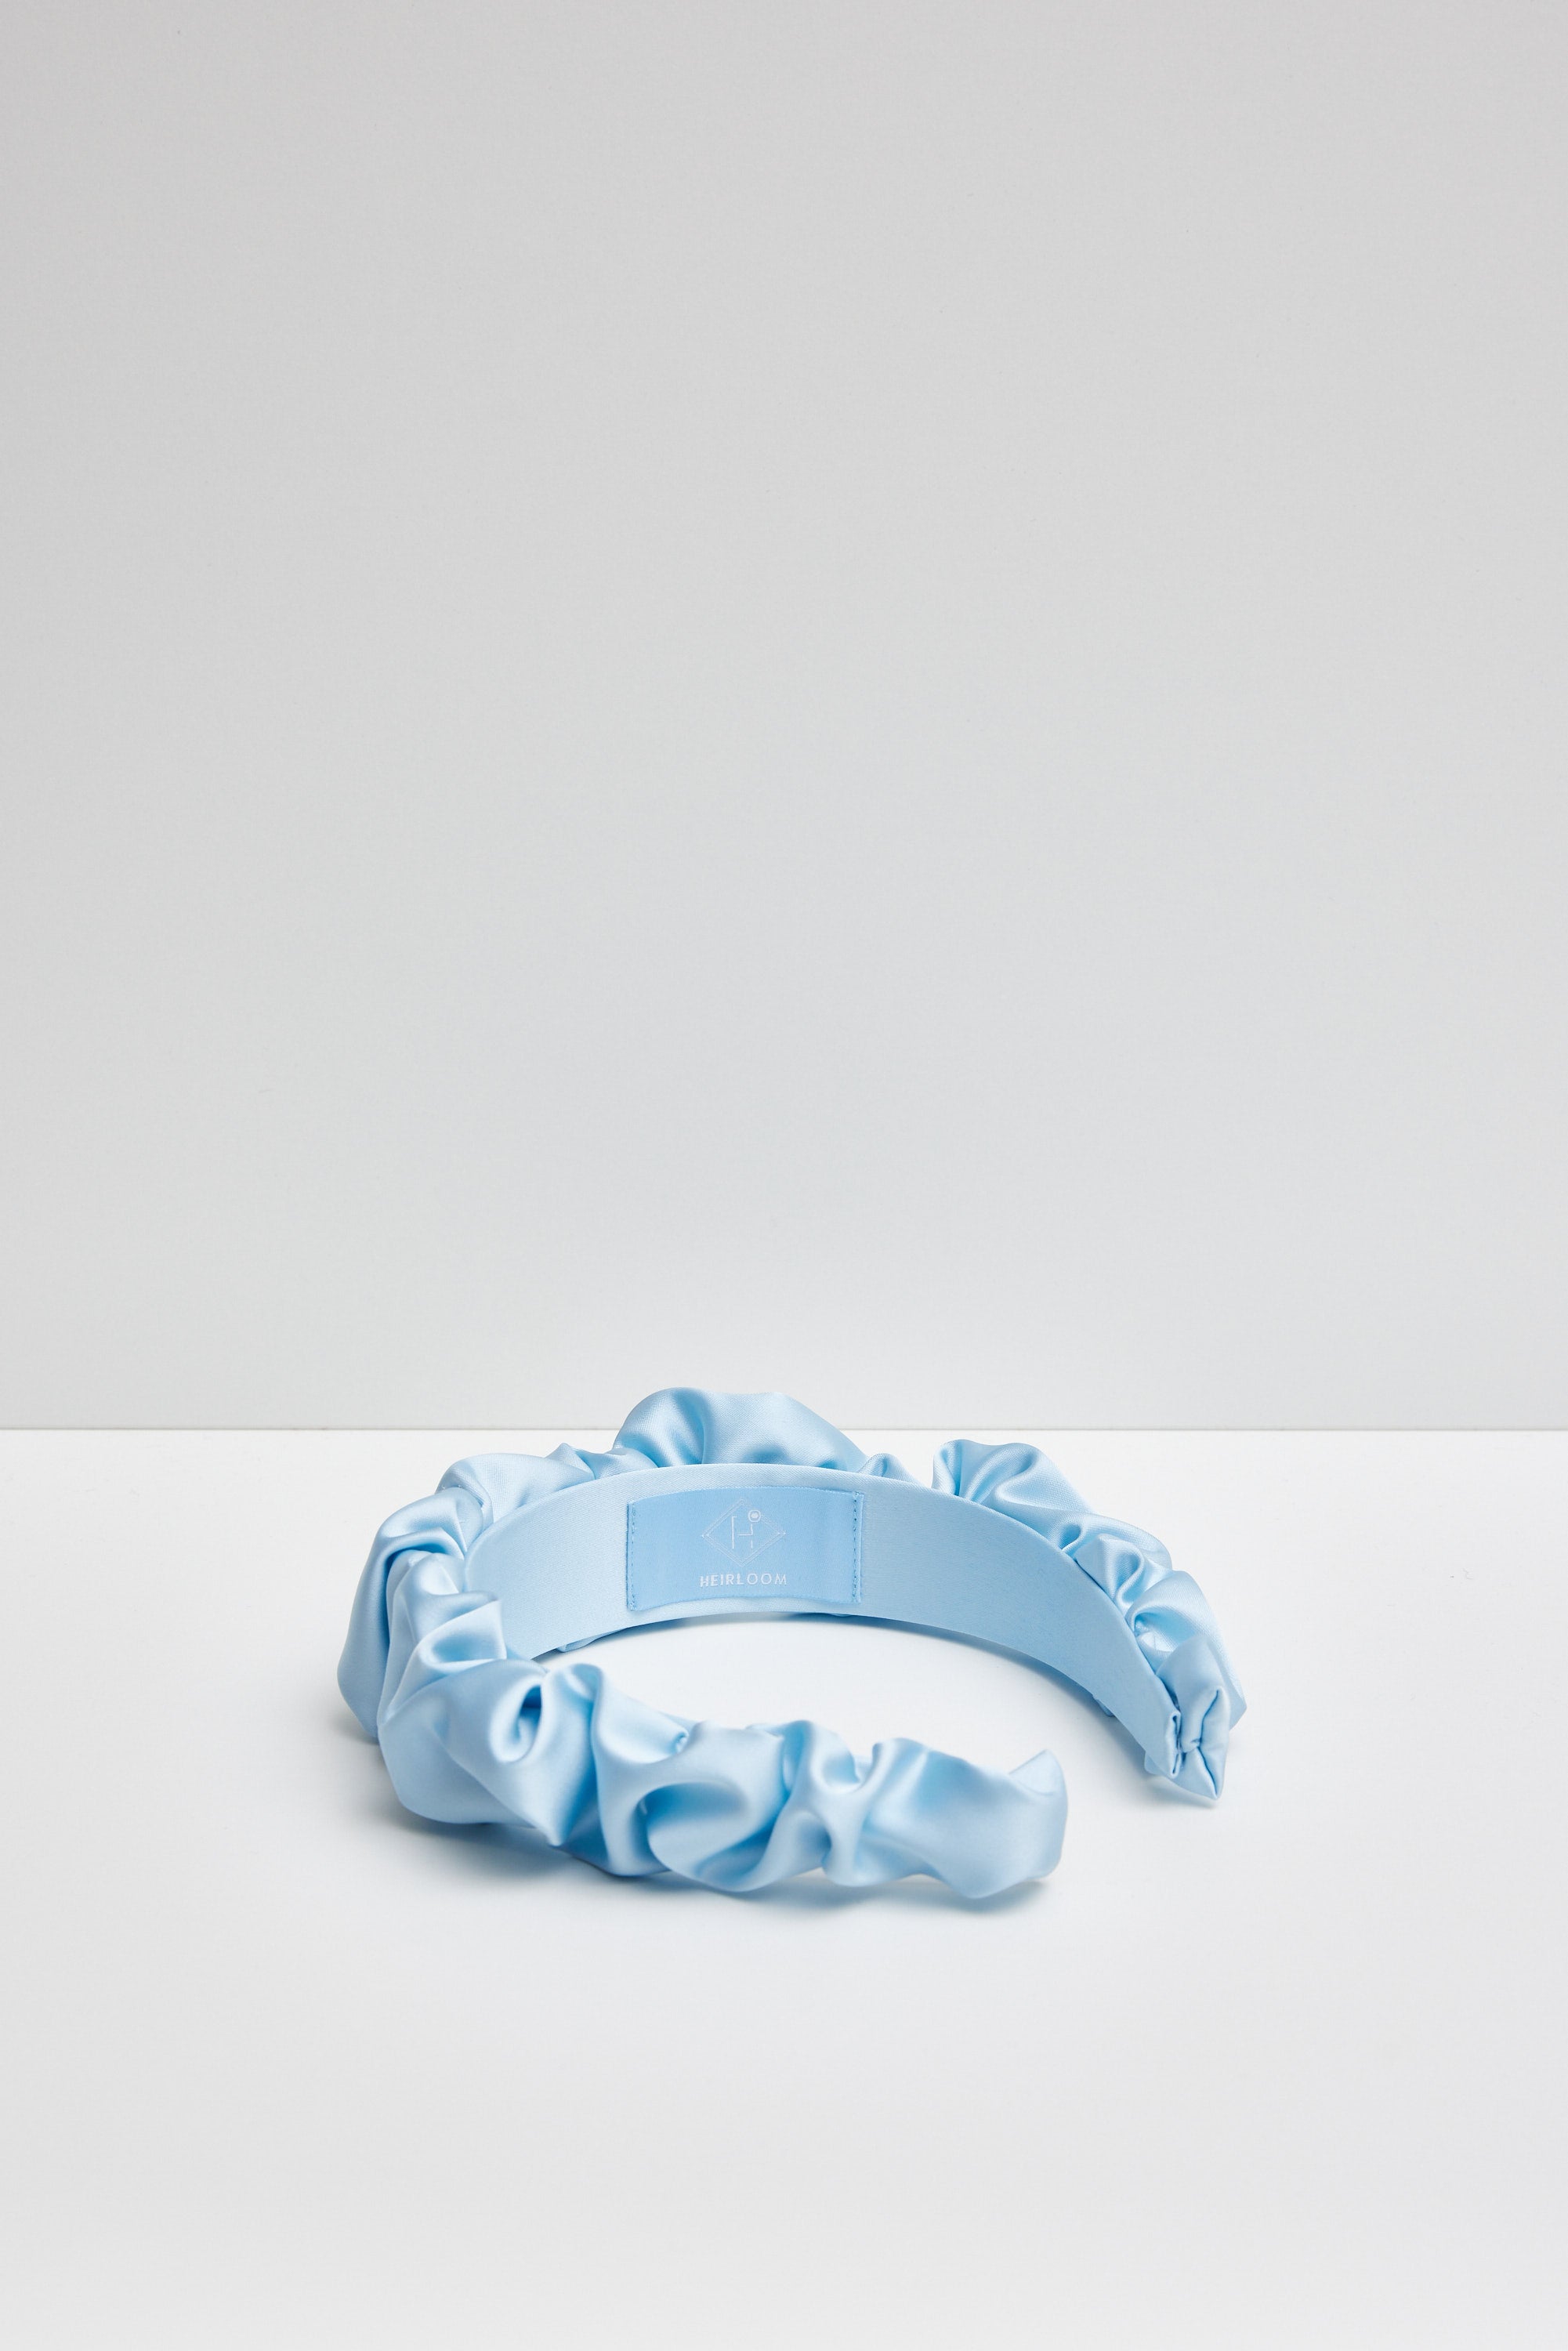 Clueless headband / Light blue satin